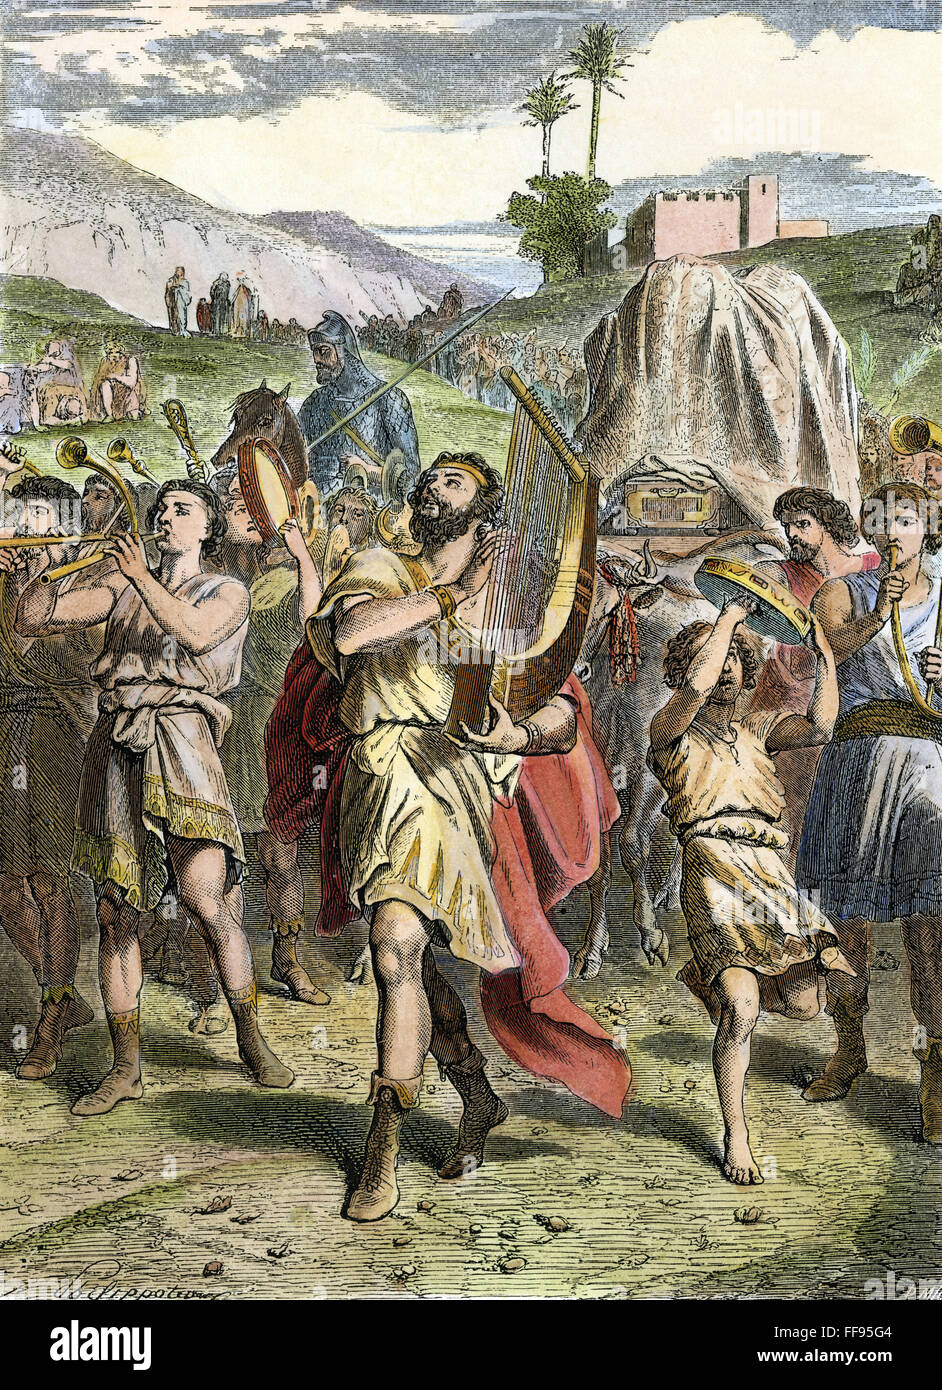 DAVID & THE ARK. /nDavid rejoicing before the Ark, having slain the Philistine (II Samuel 6: 14-17). Wood engraving, English, late 19th century. Stock Photo